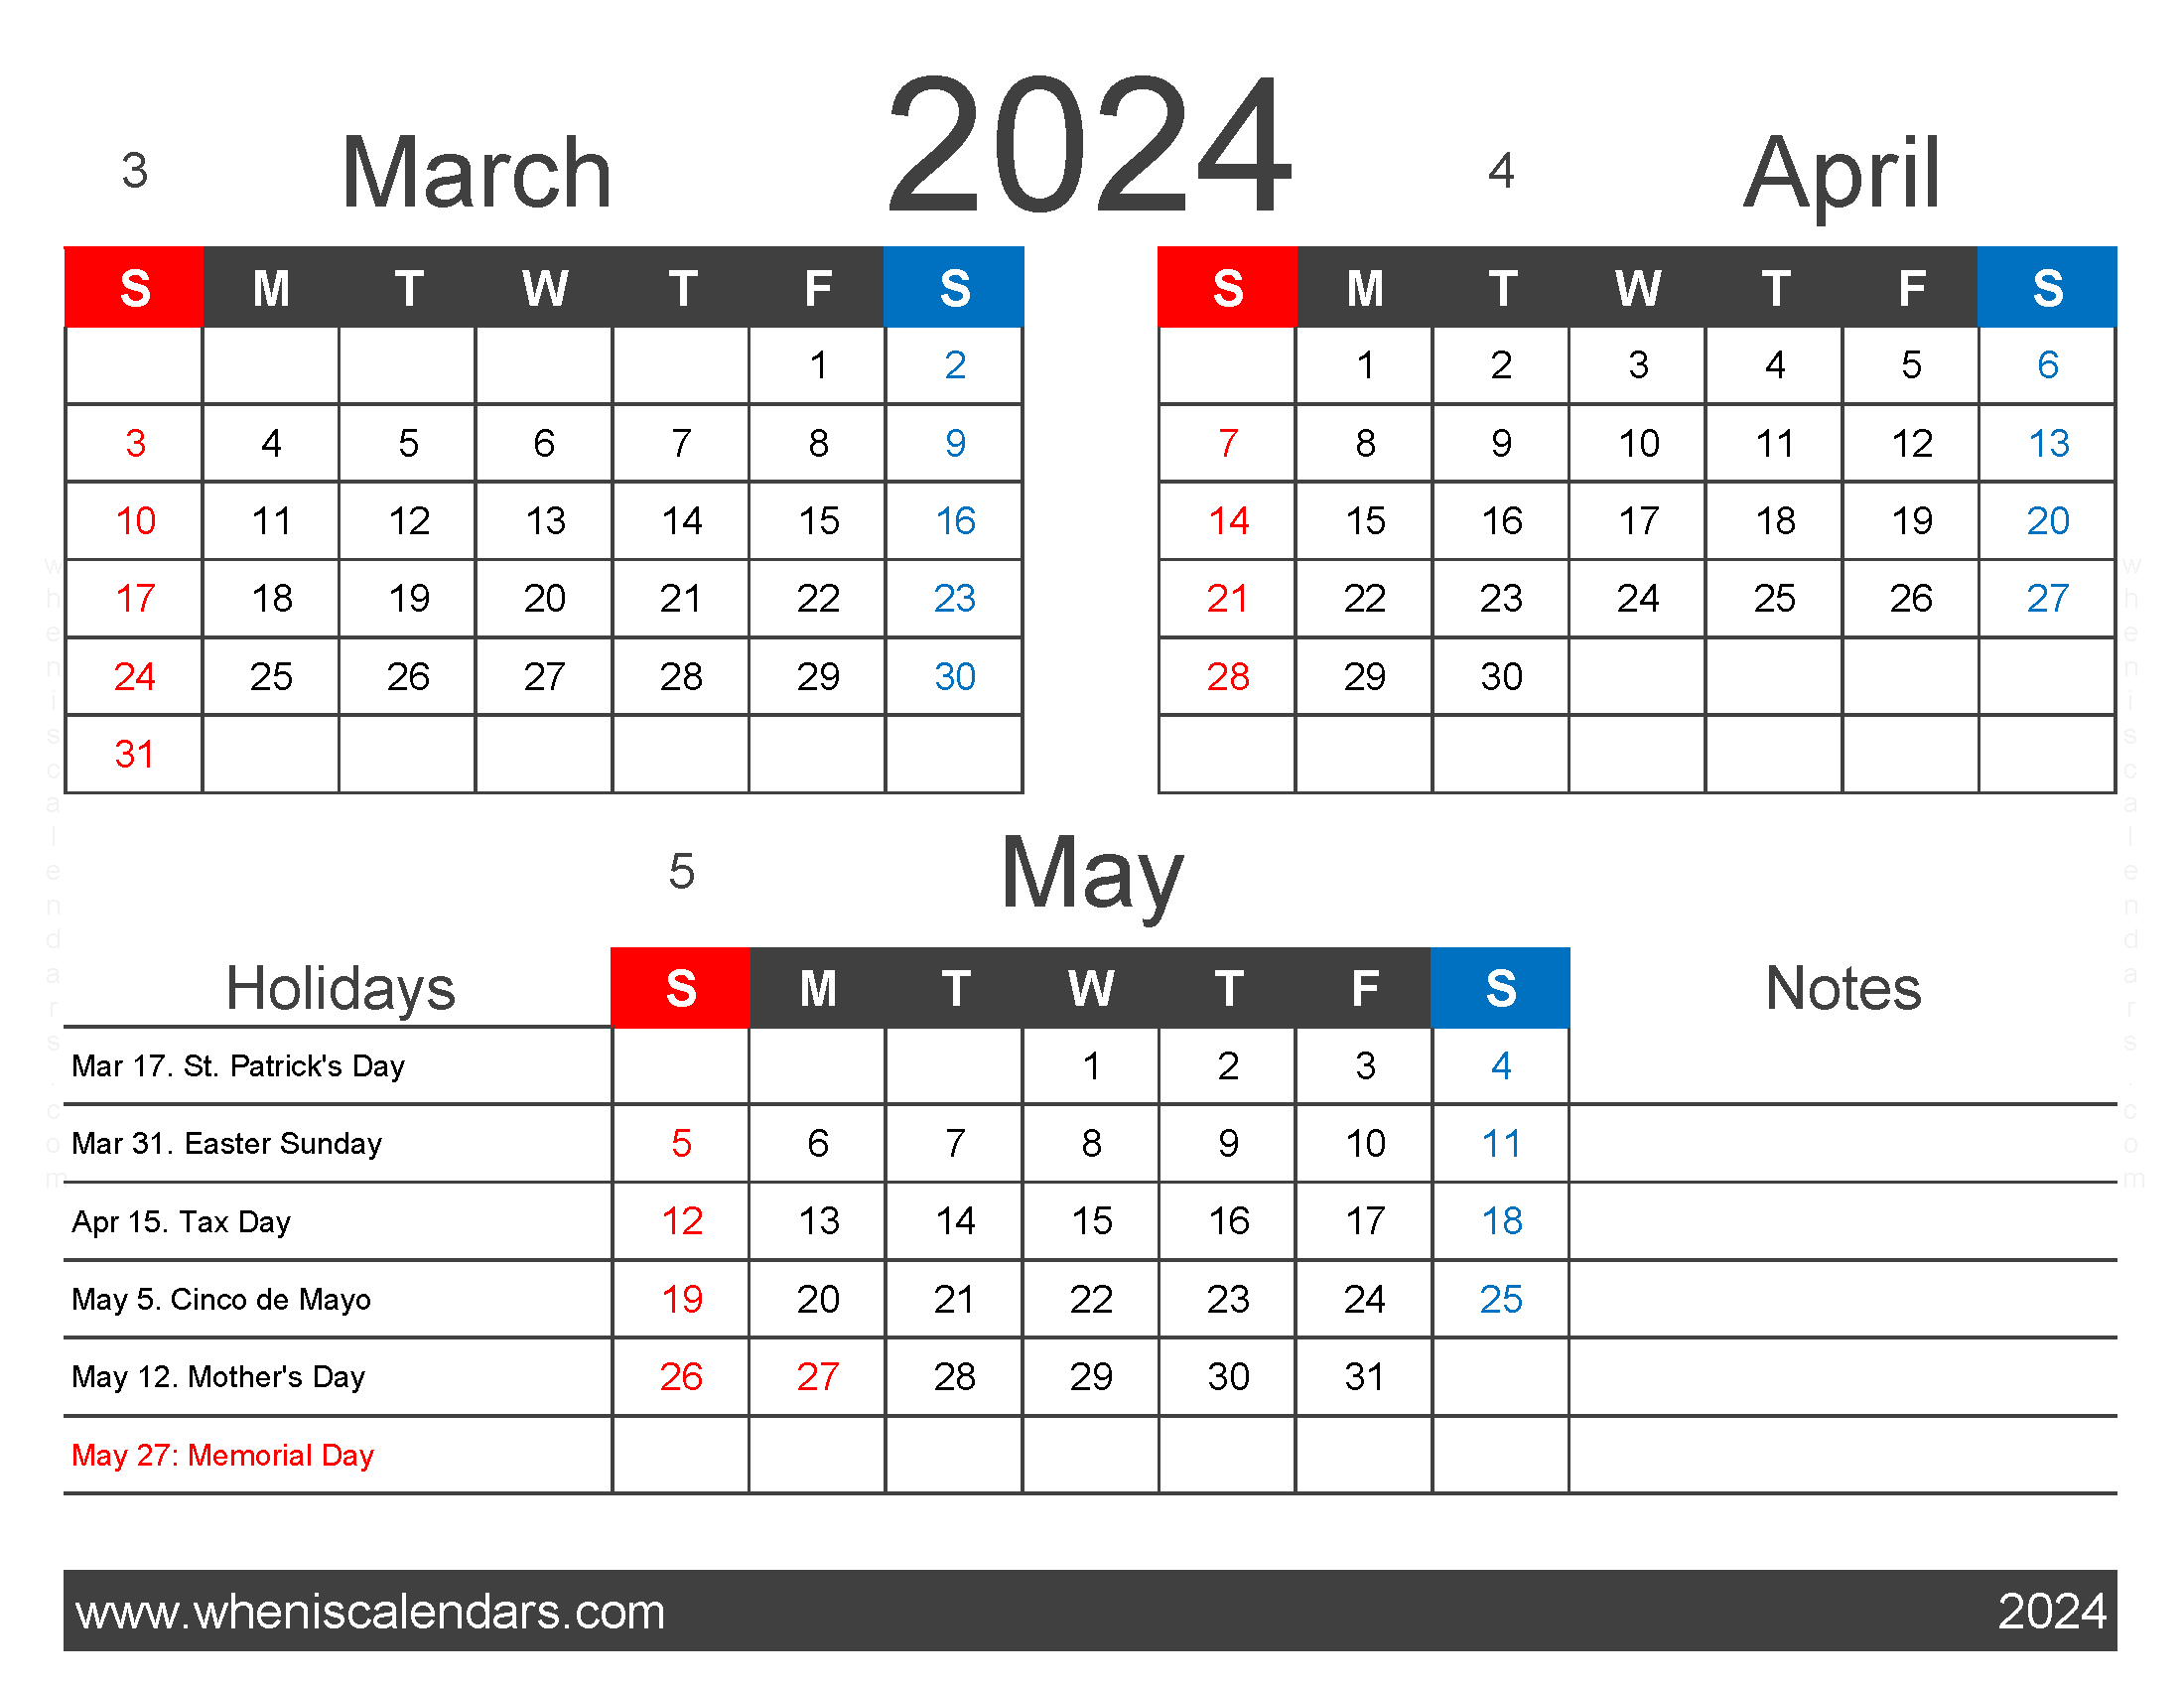 Download Mar Apr May 2024 calendar MAM401